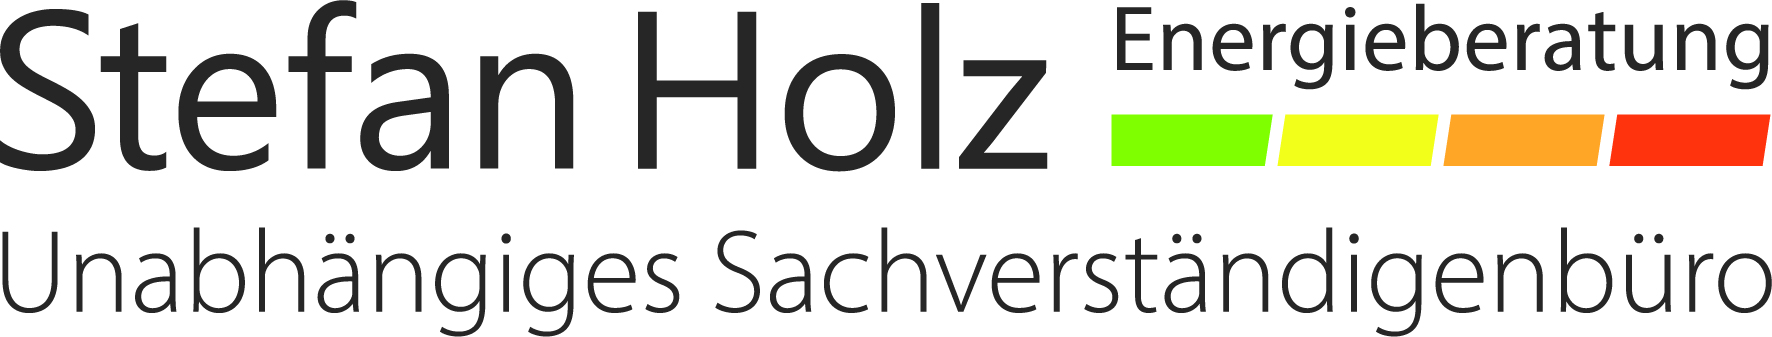 StefanHolz Energieberatung Logo